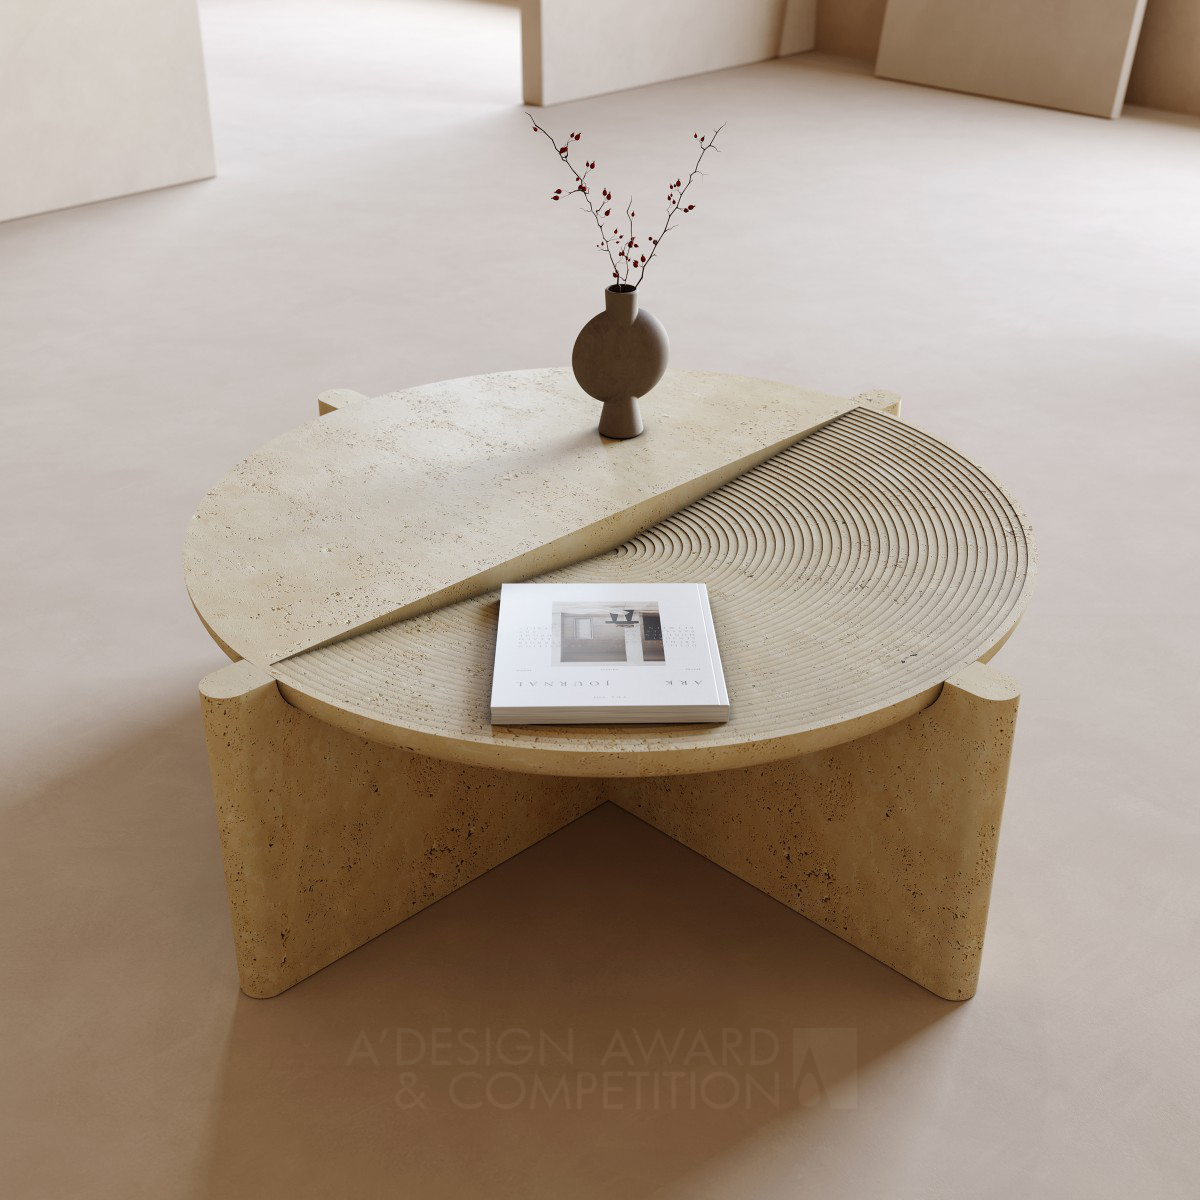 Arkhe Furniture Collection by Fulden Topaloglu Silver Furniture Design Award Winner 2024 